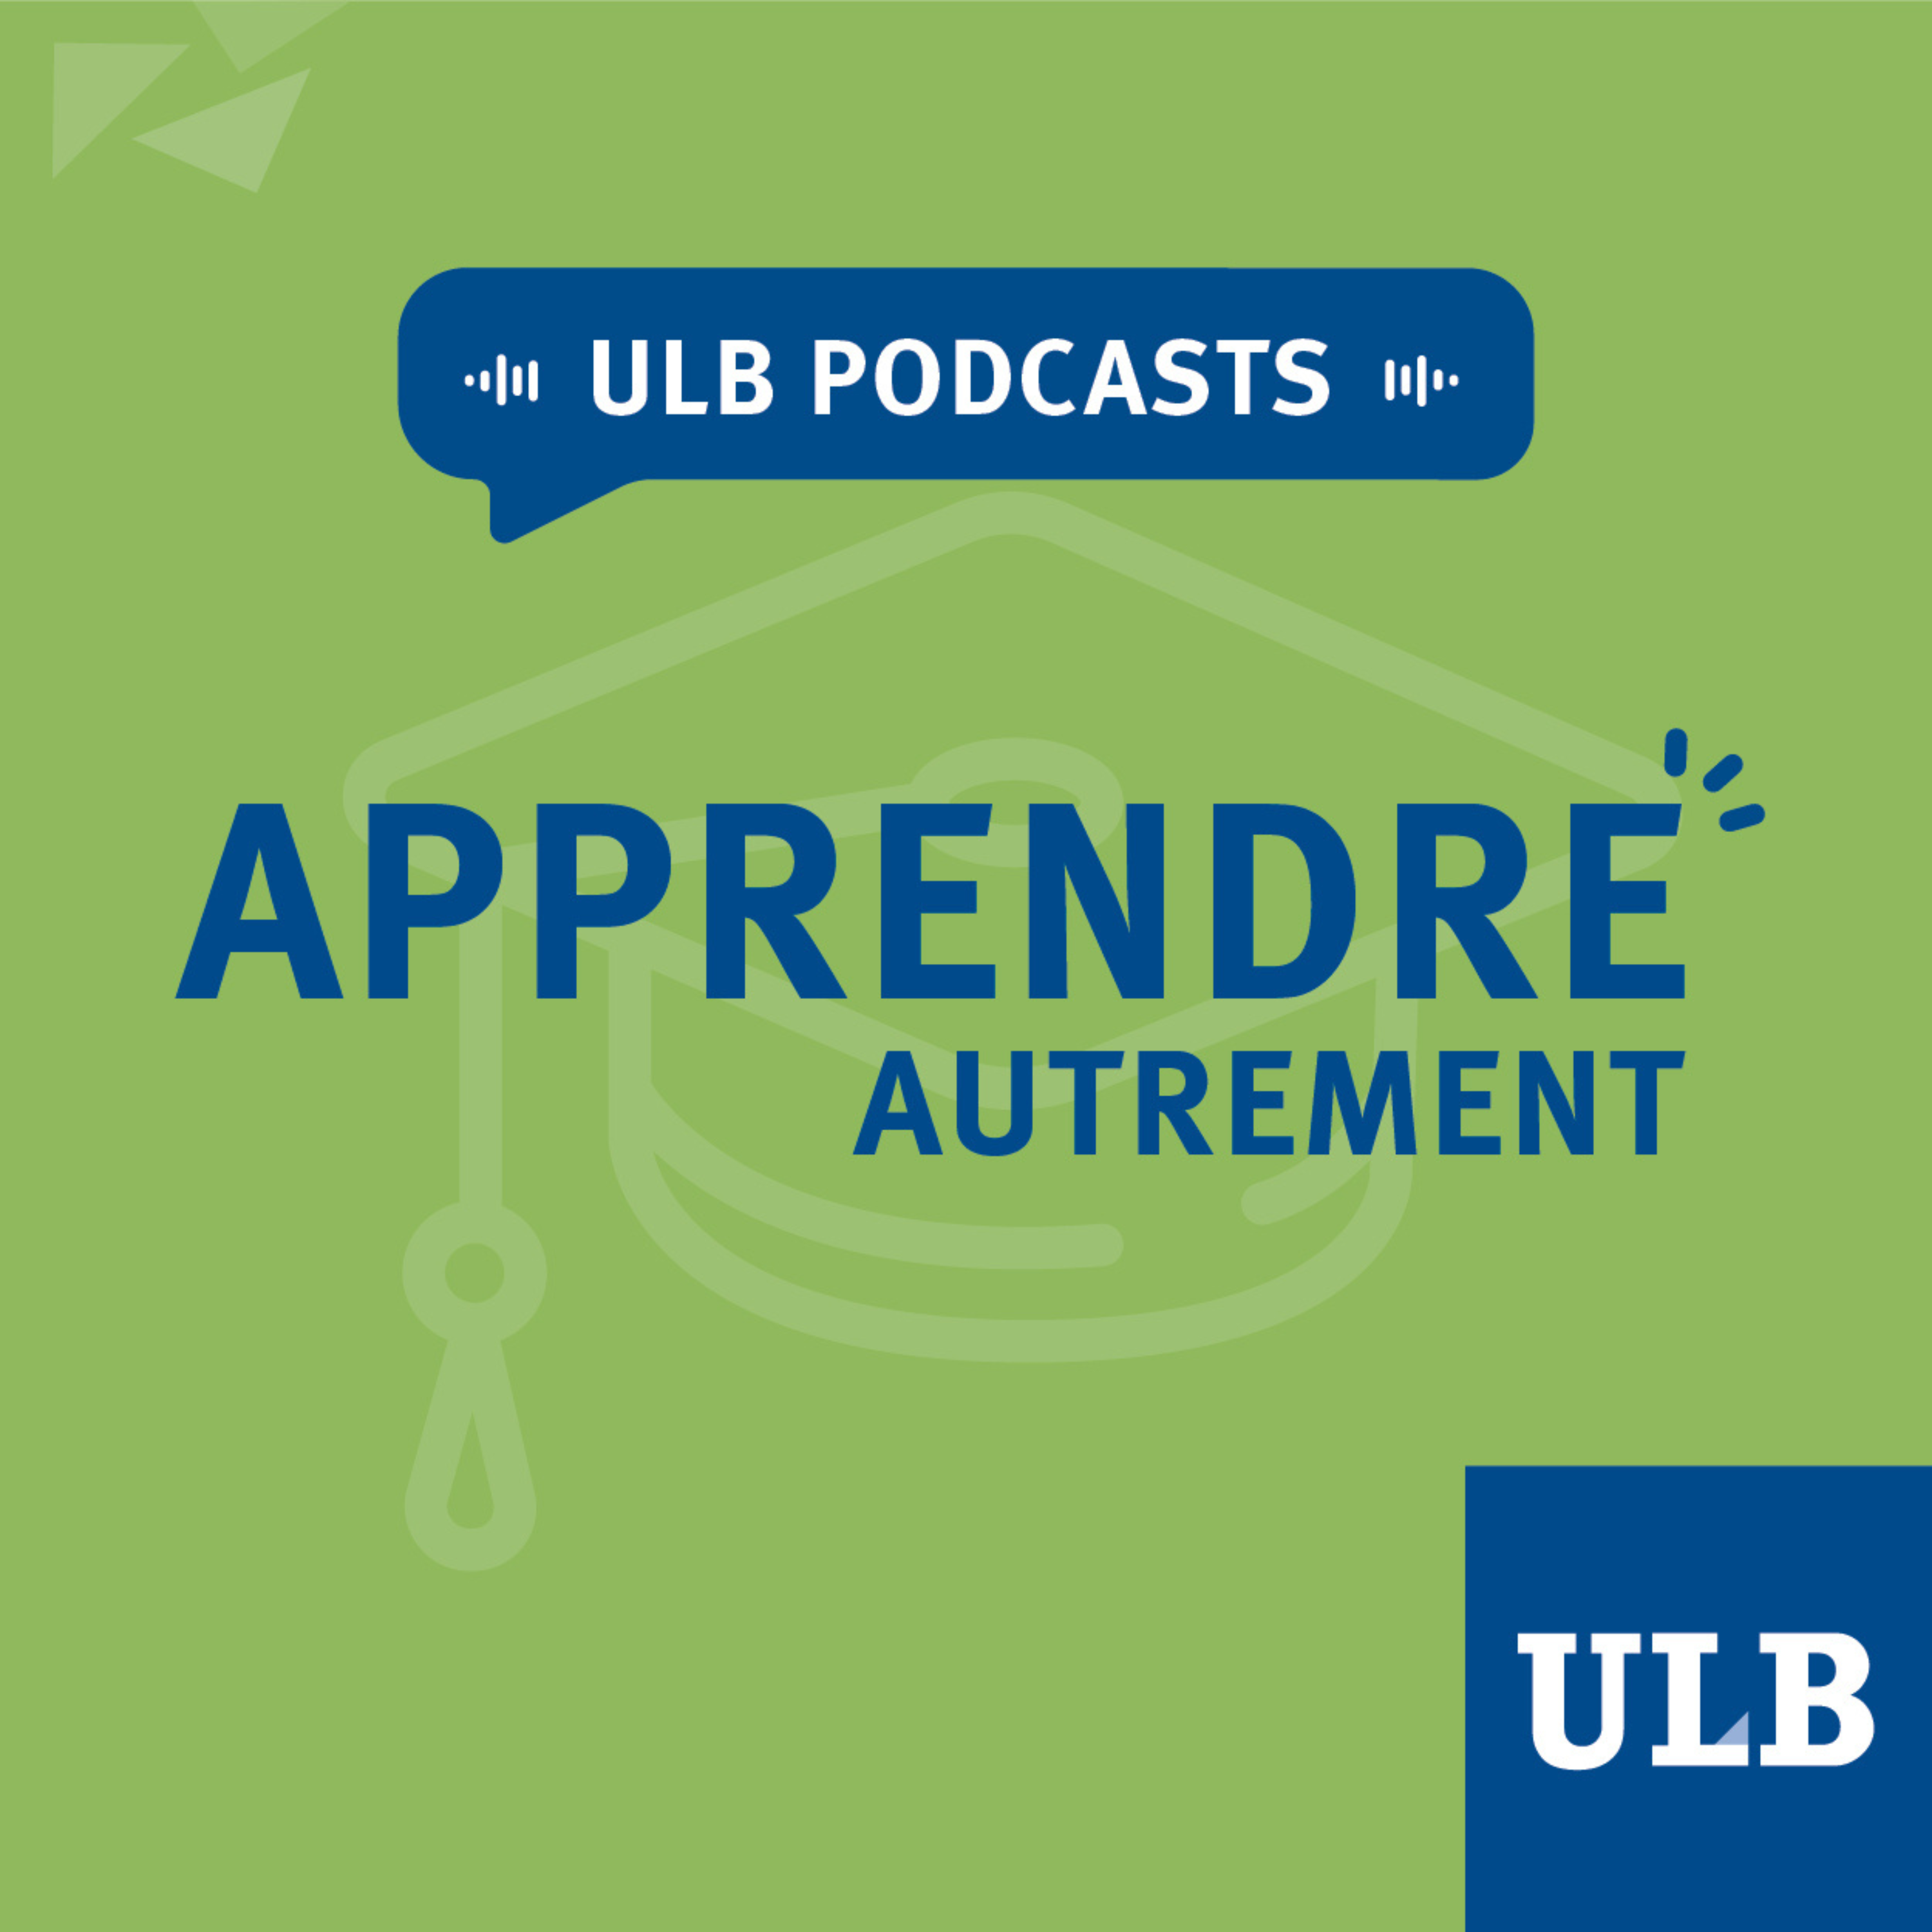 ULB Podcasts